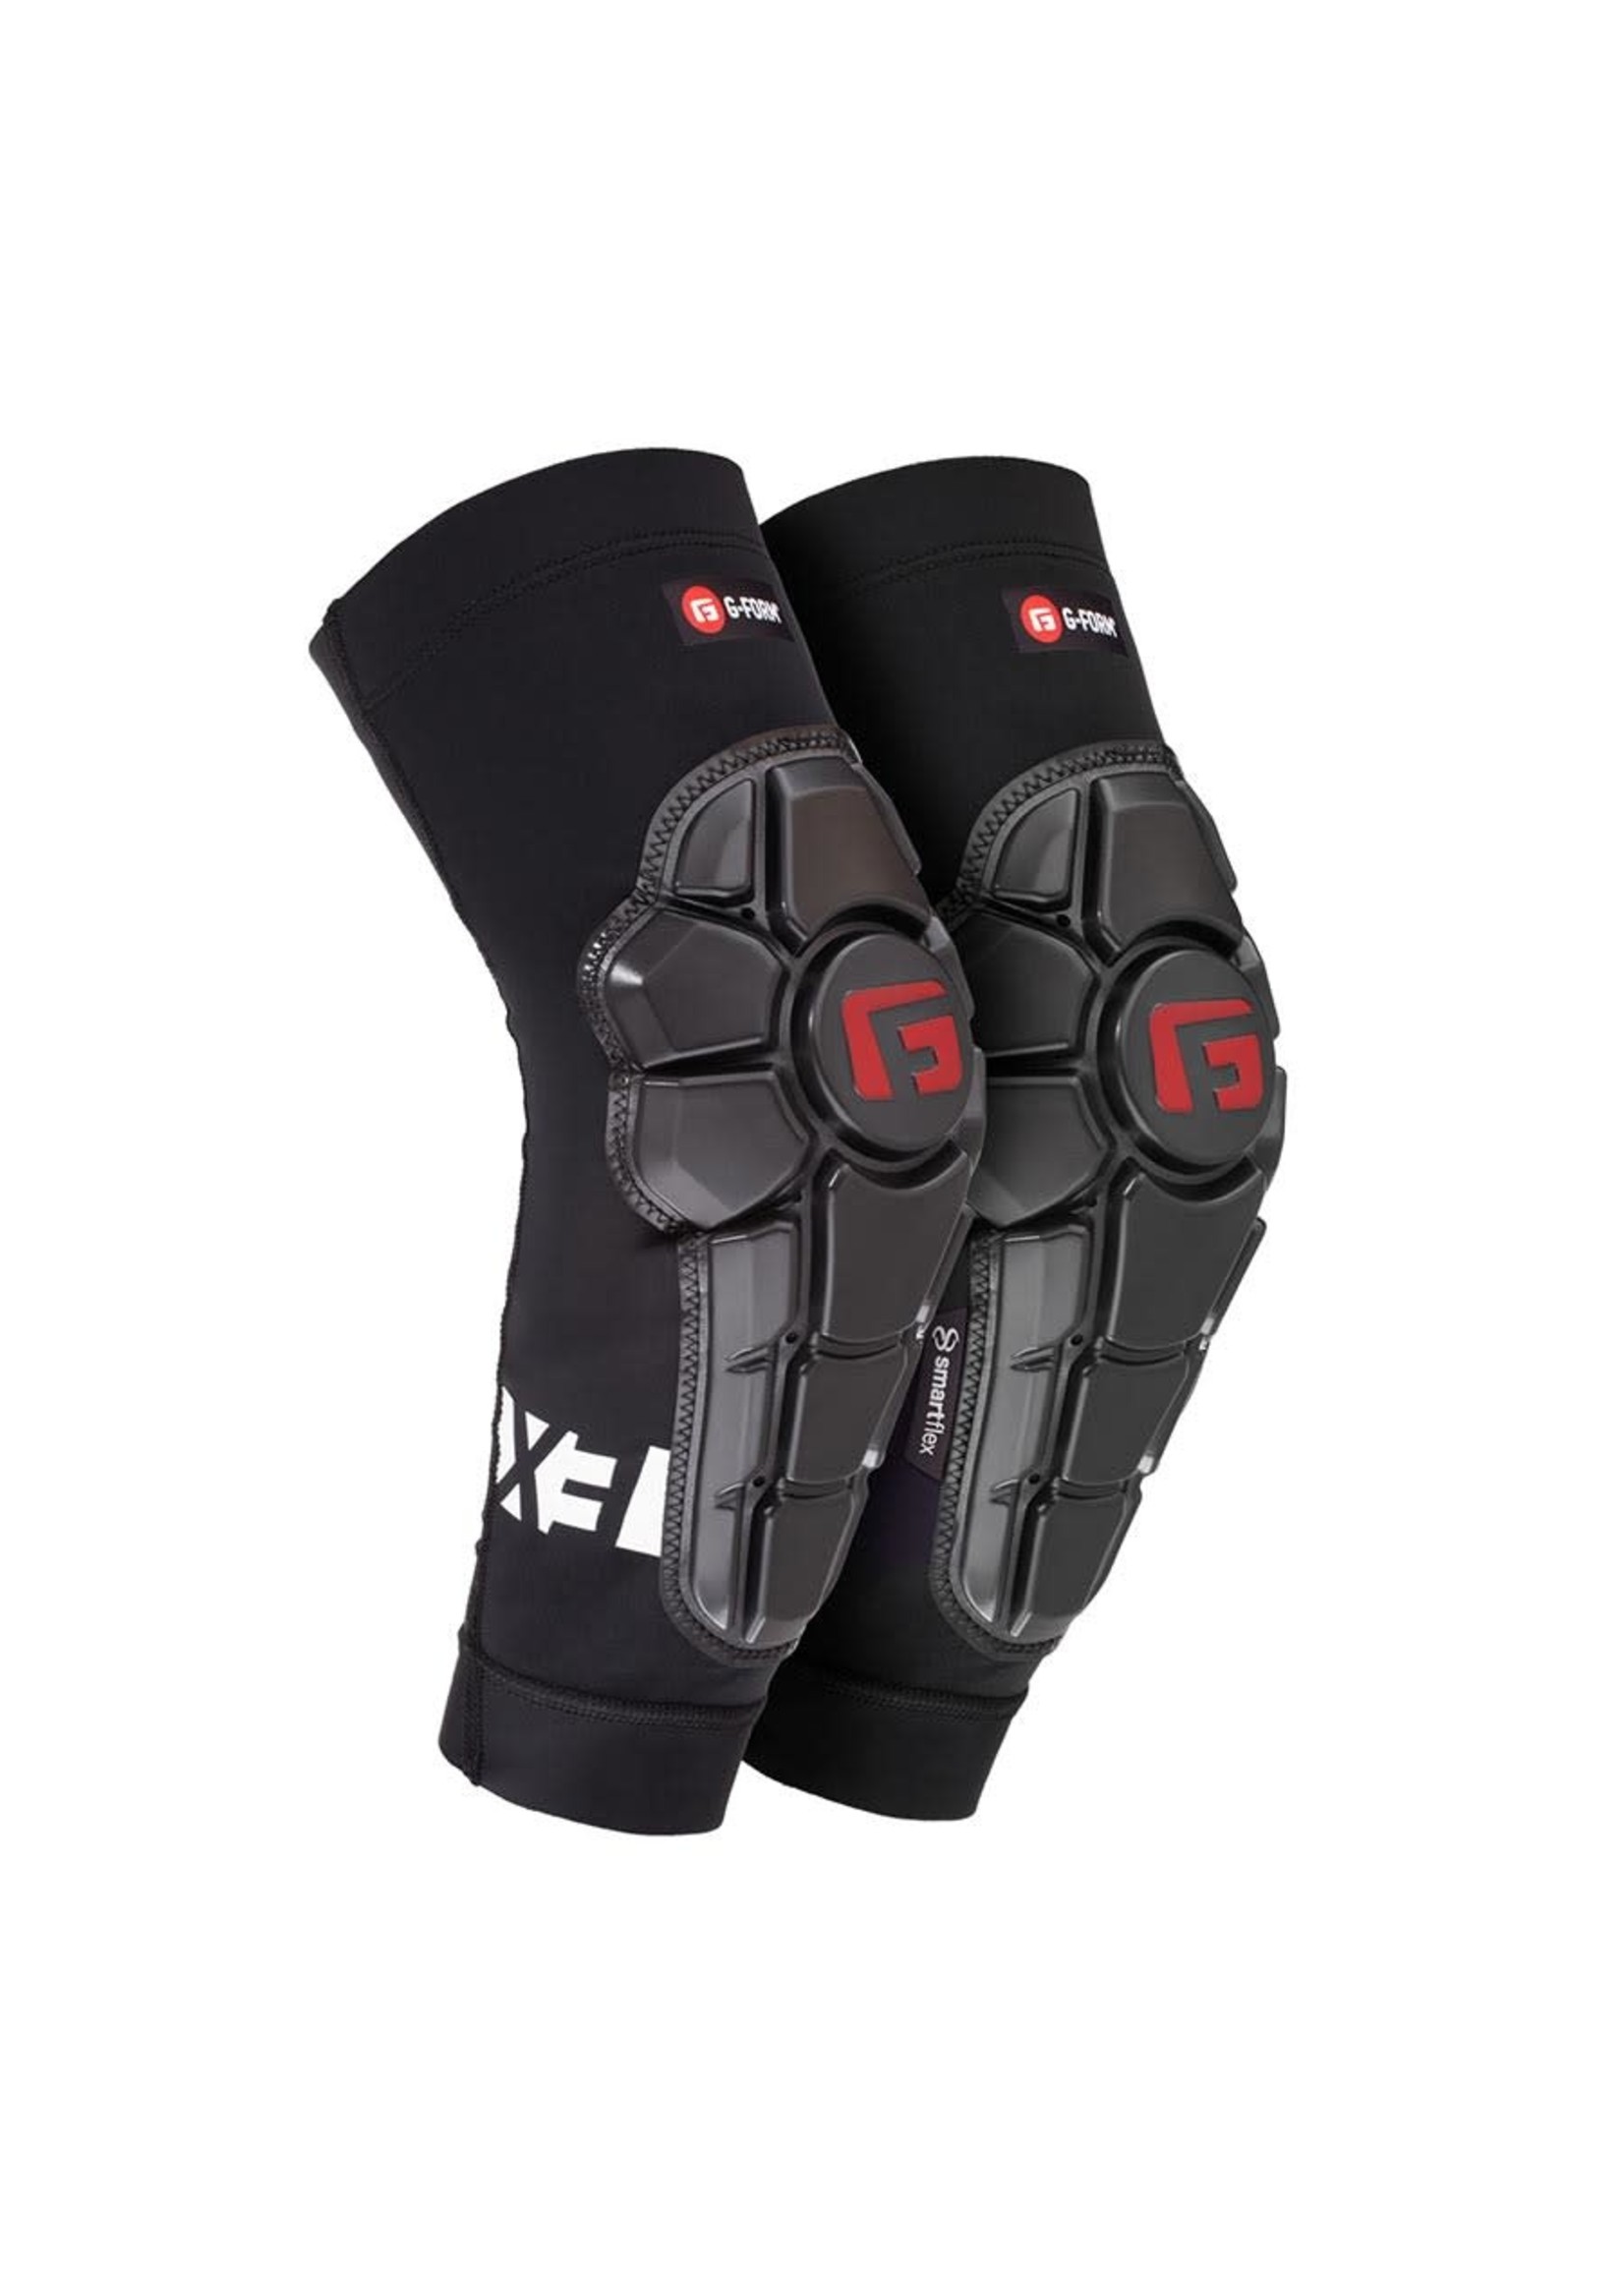 G-Form S Pro-X3 Elbow/Forearm Guard Black Pair G-Form